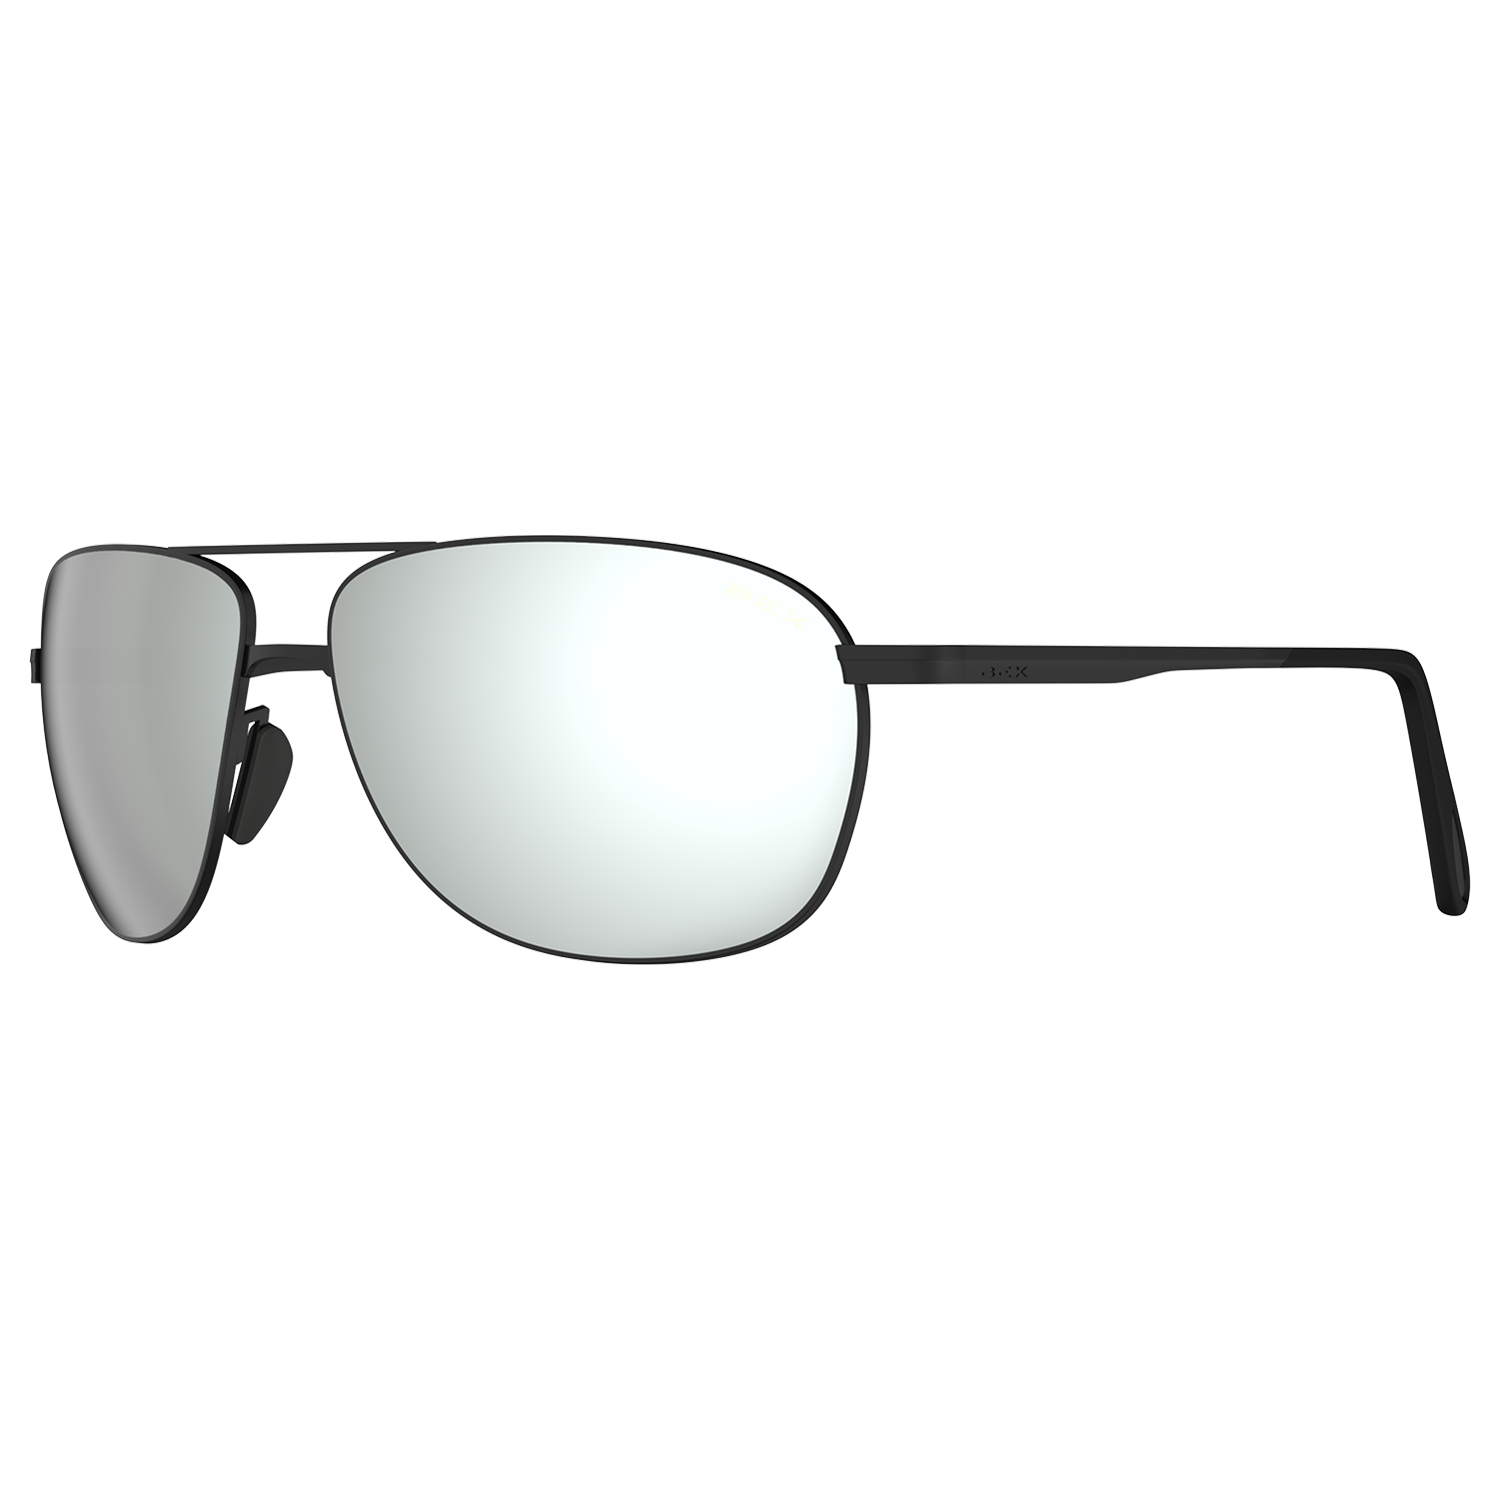 Bex Nova Matte Black/Gray/Silver Sunglasses - S77MBGS